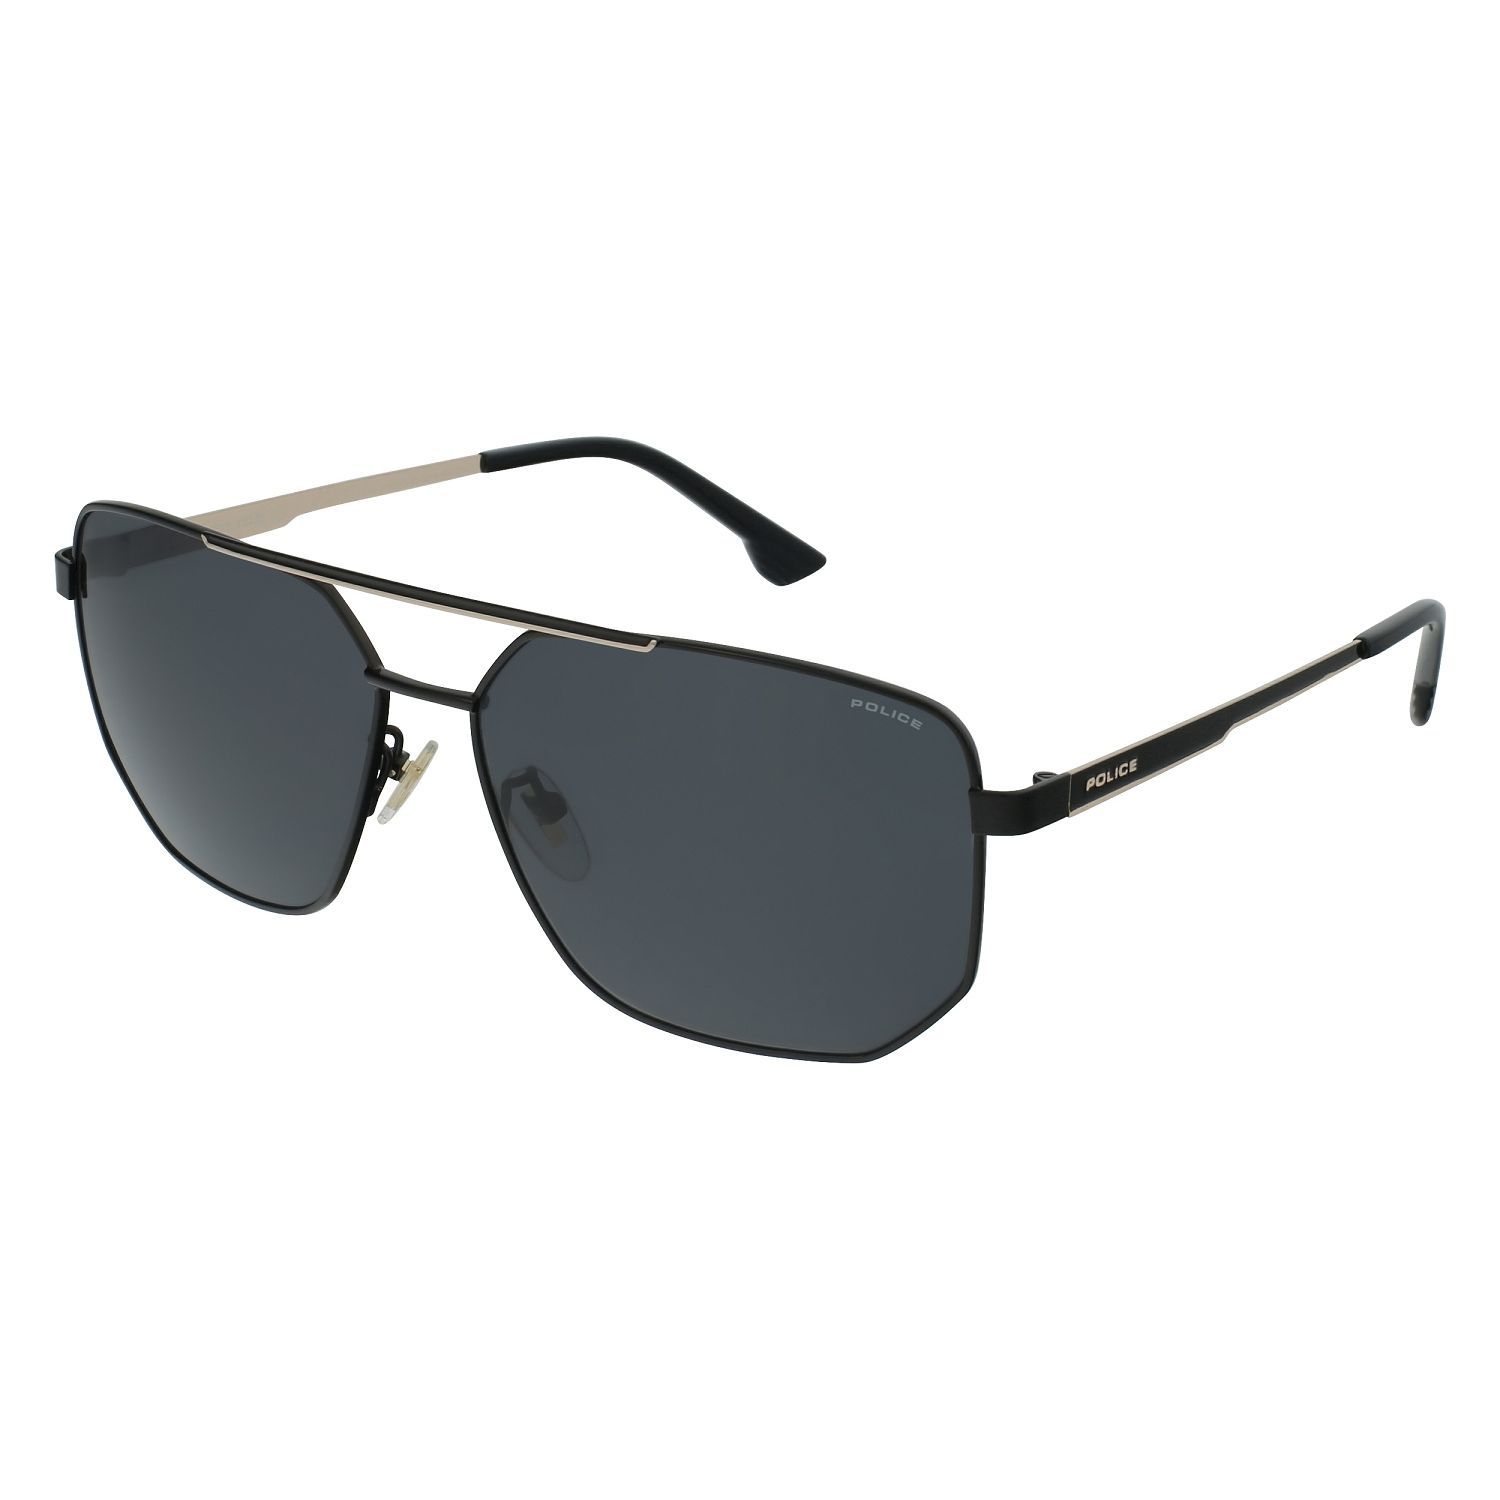 SPLB36M Square Sunglasses 304 - size 61